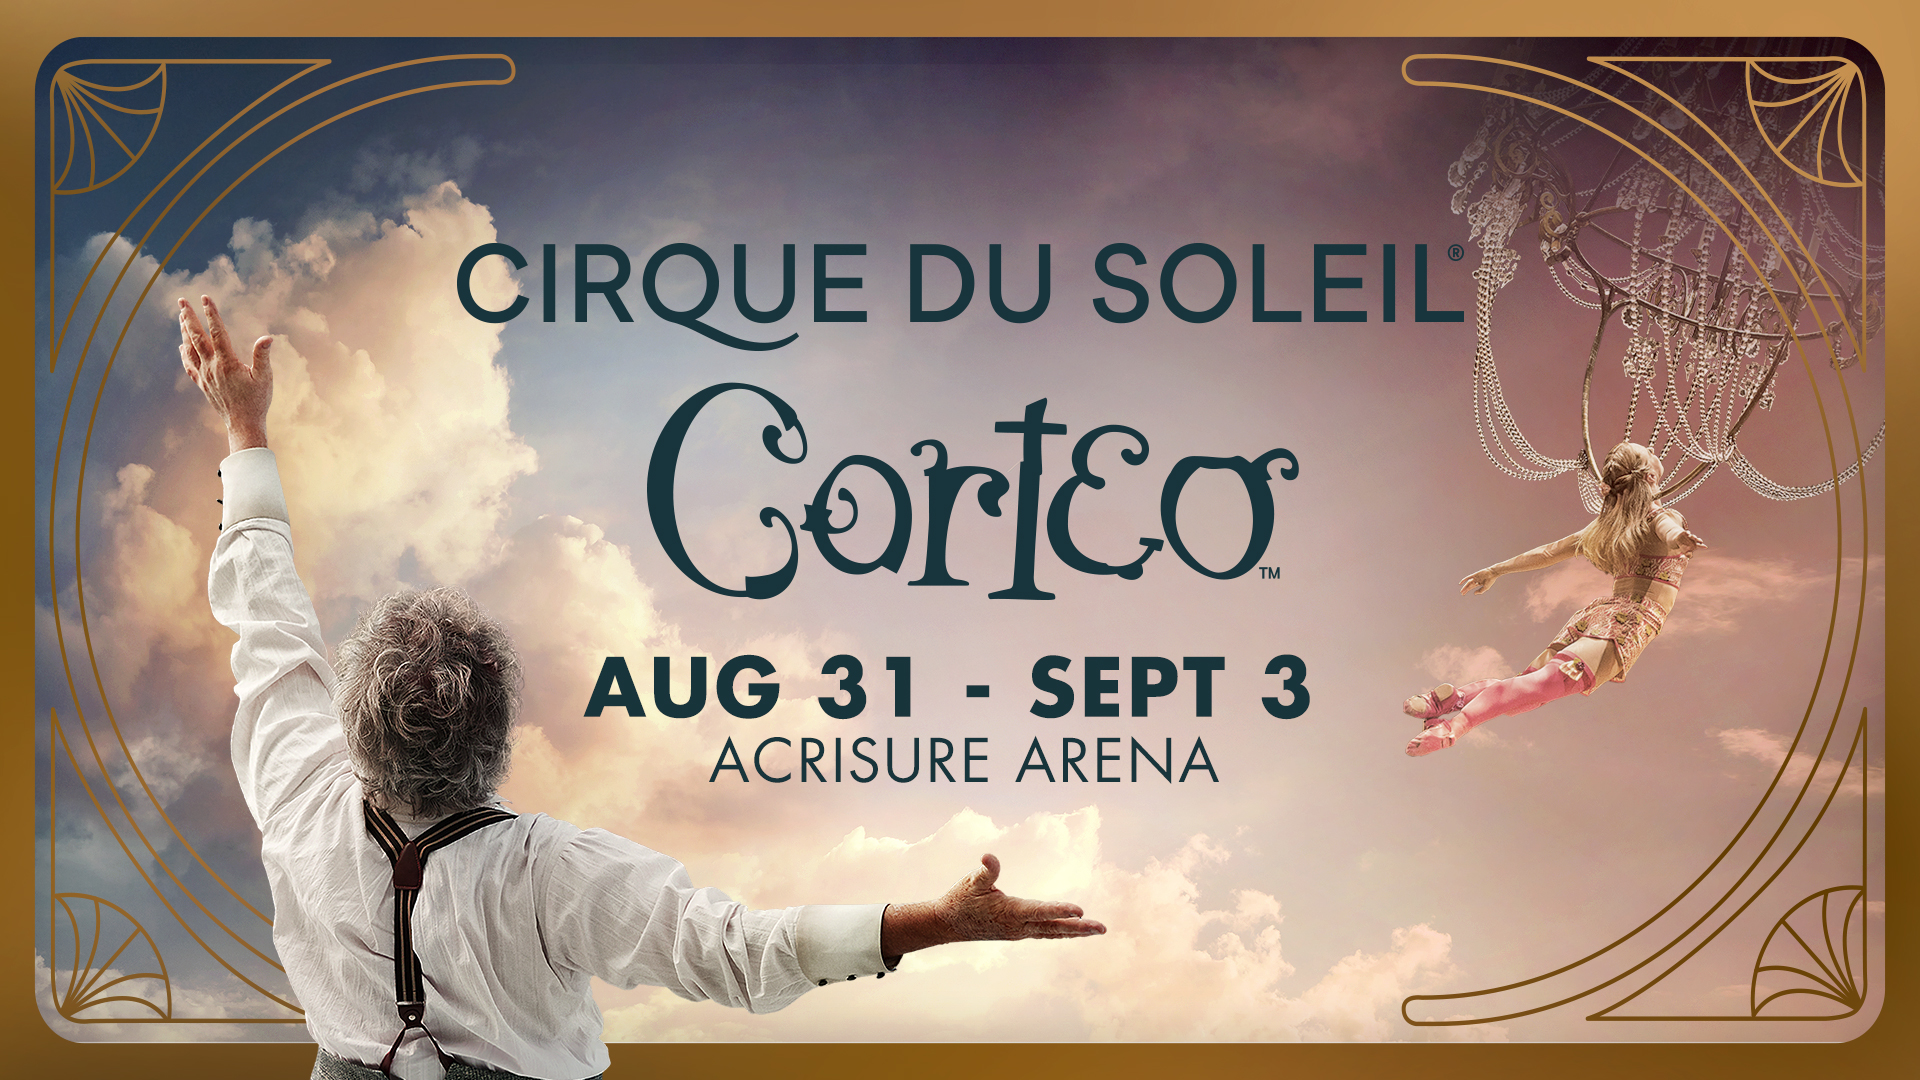 Cirque du Soleil: Corteo coming to Acrisure Arena Aug. 31 - Sept. 3.